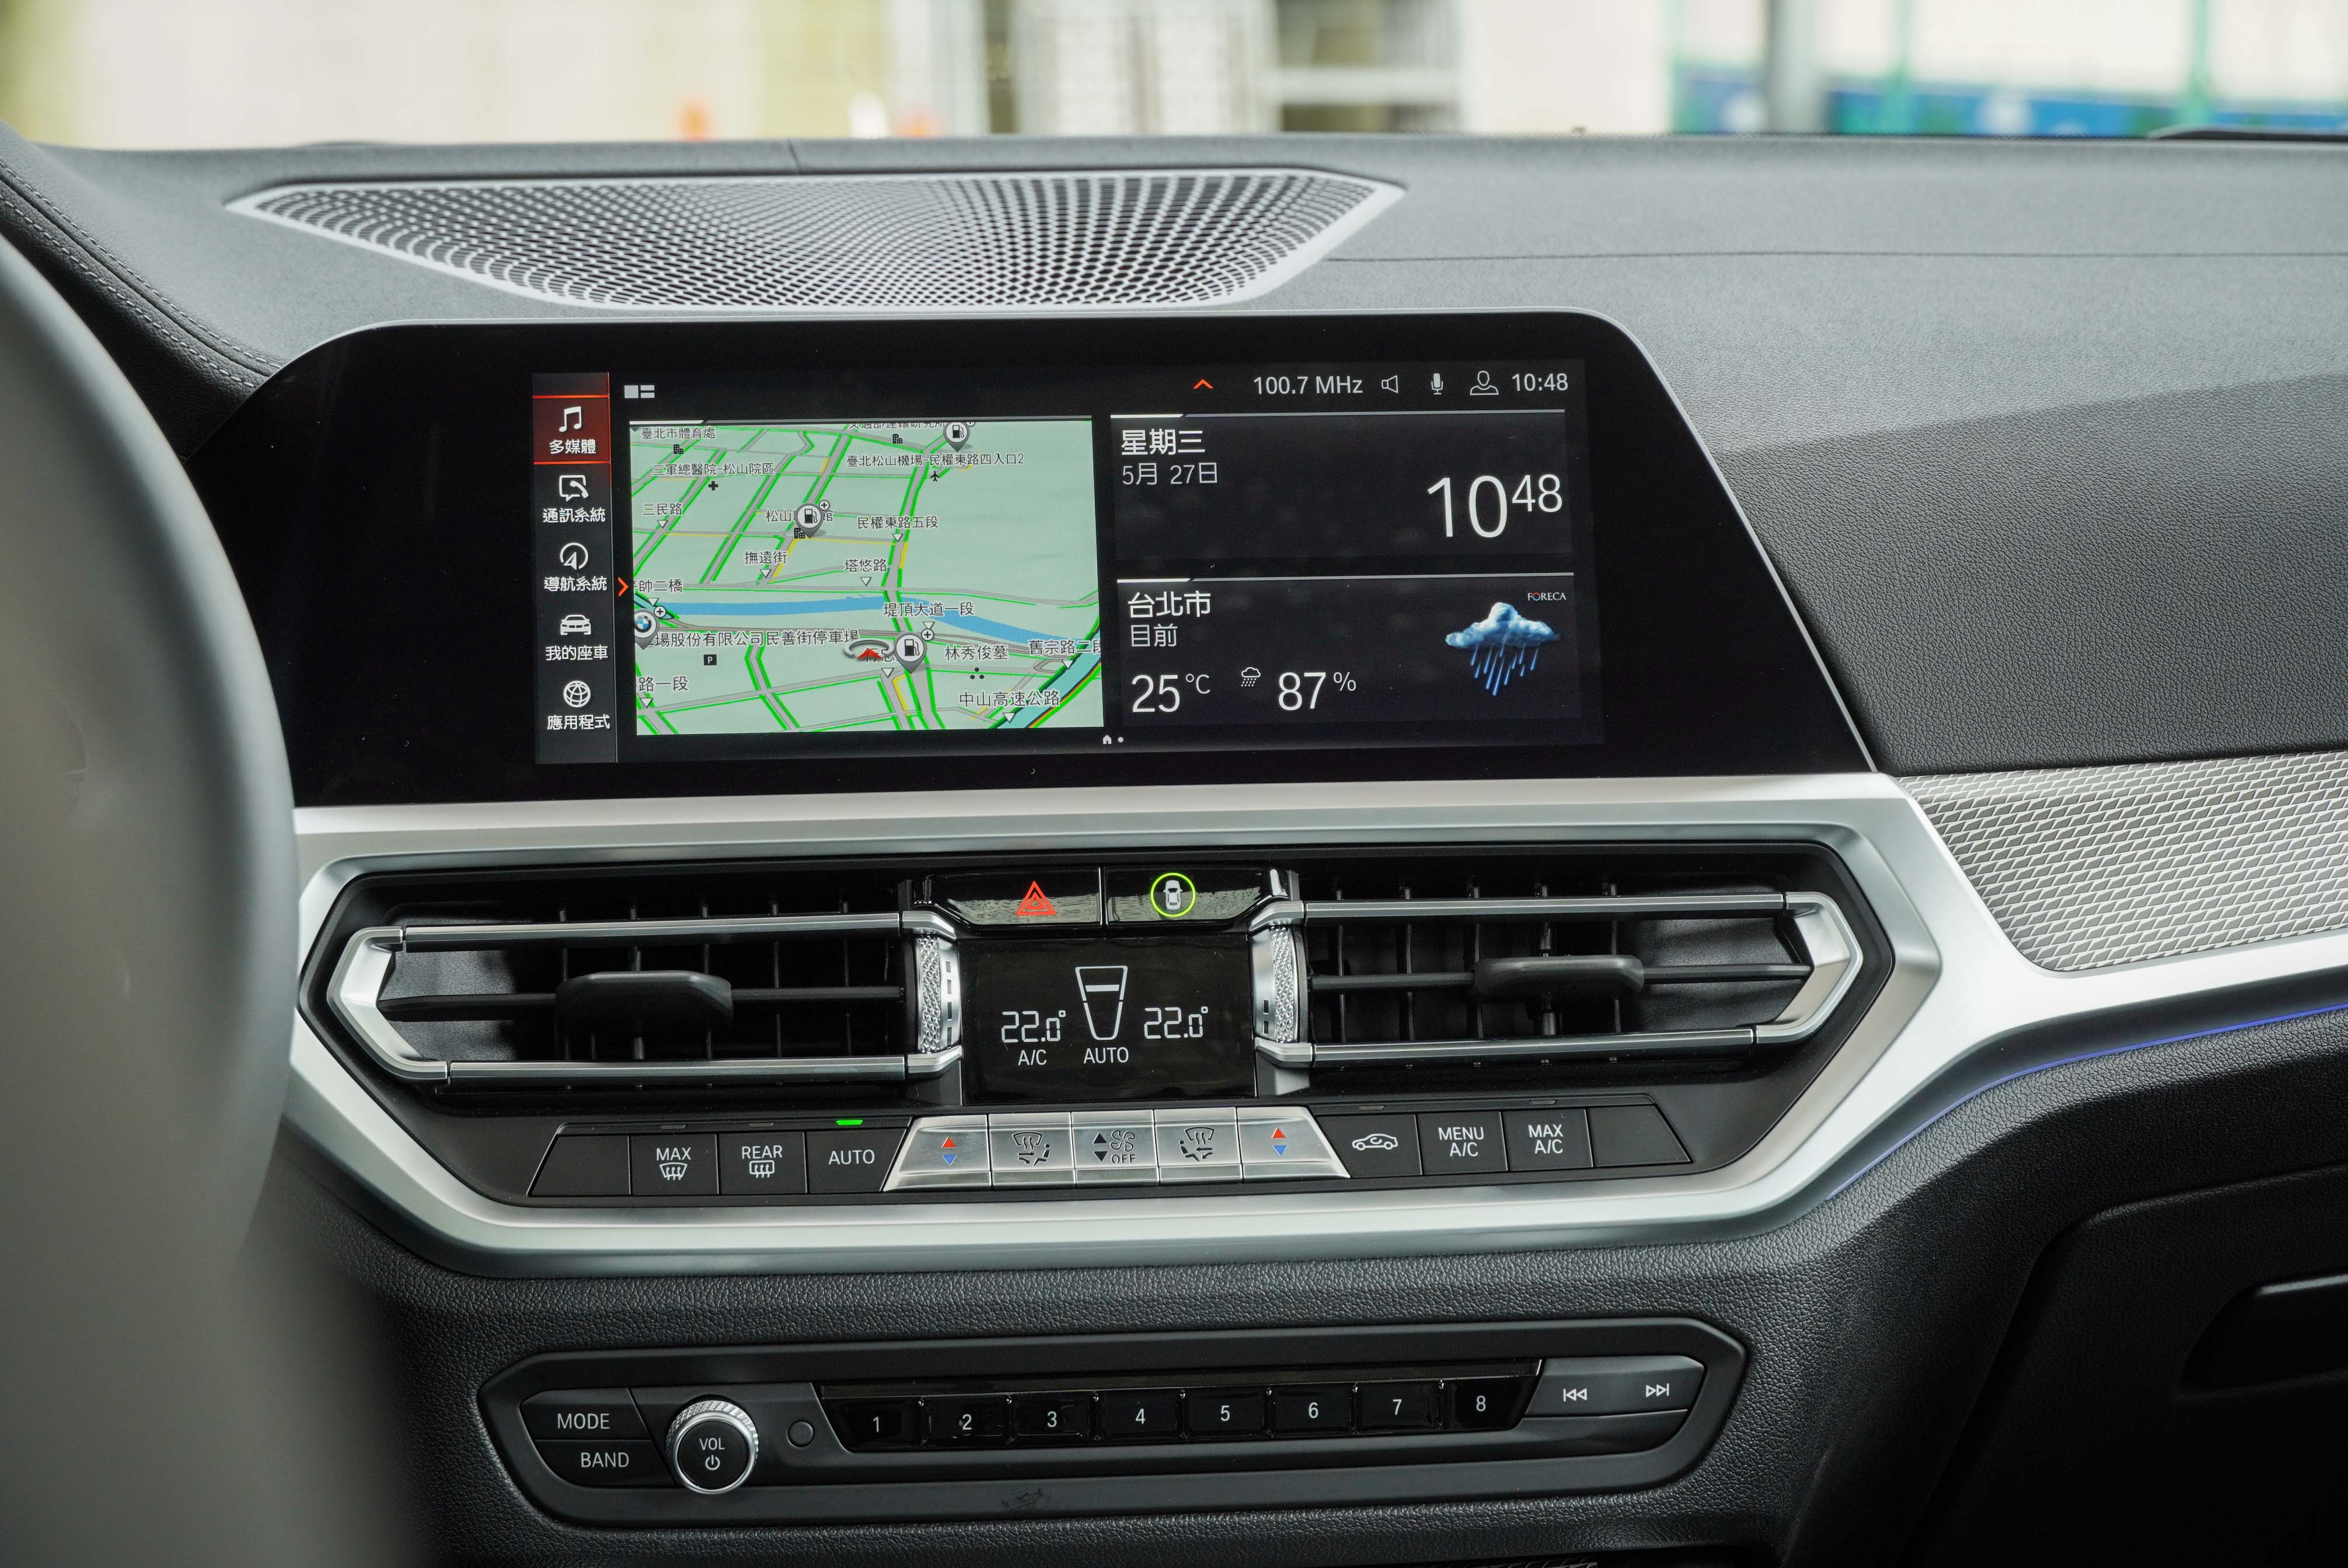 iDrive 控制系統操作便利且直覺，支援無線 Apple CarPlay 整合系統。